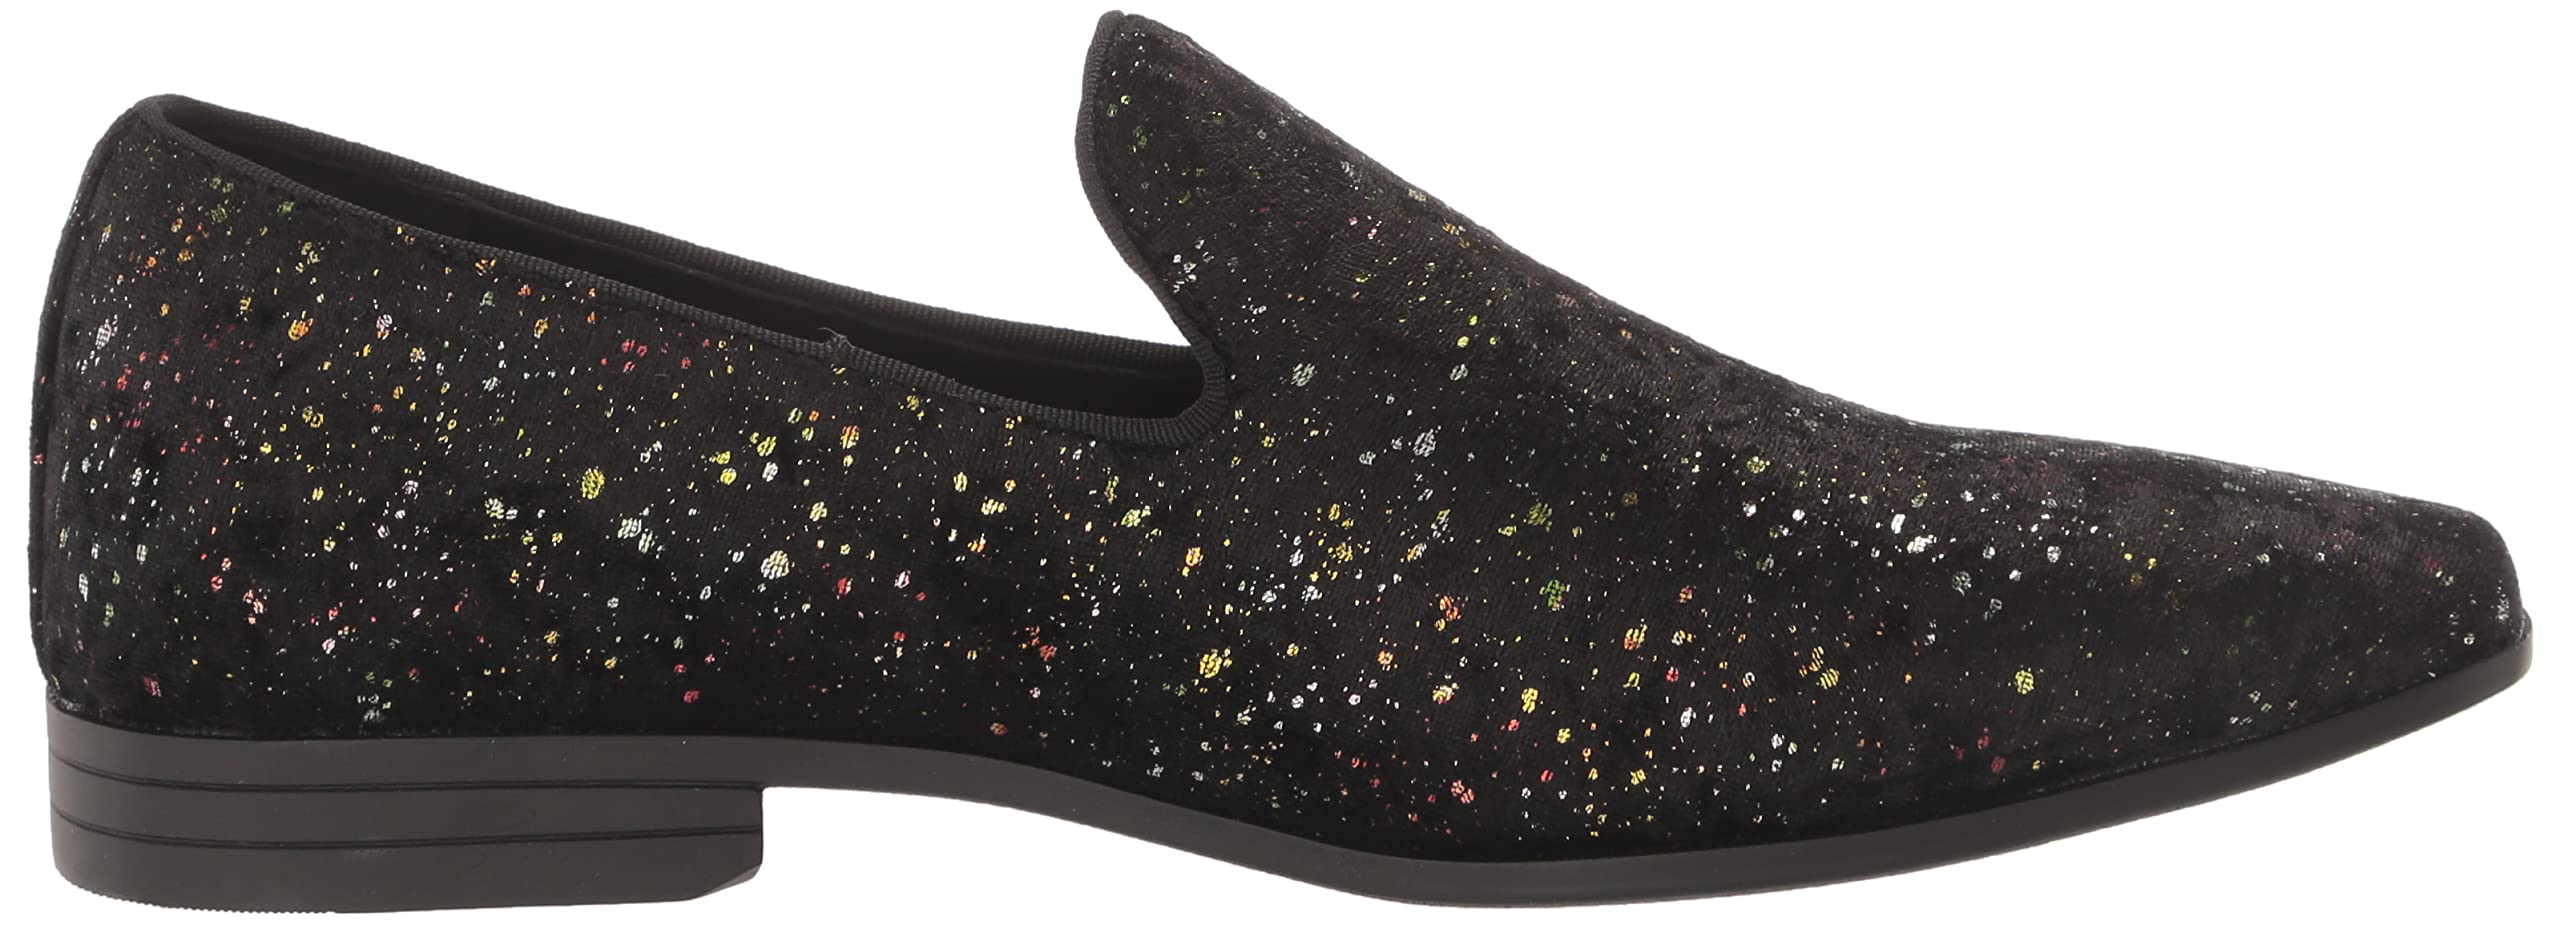 STACY ADAMS Men's Stellar Glitter Slip on Loafer